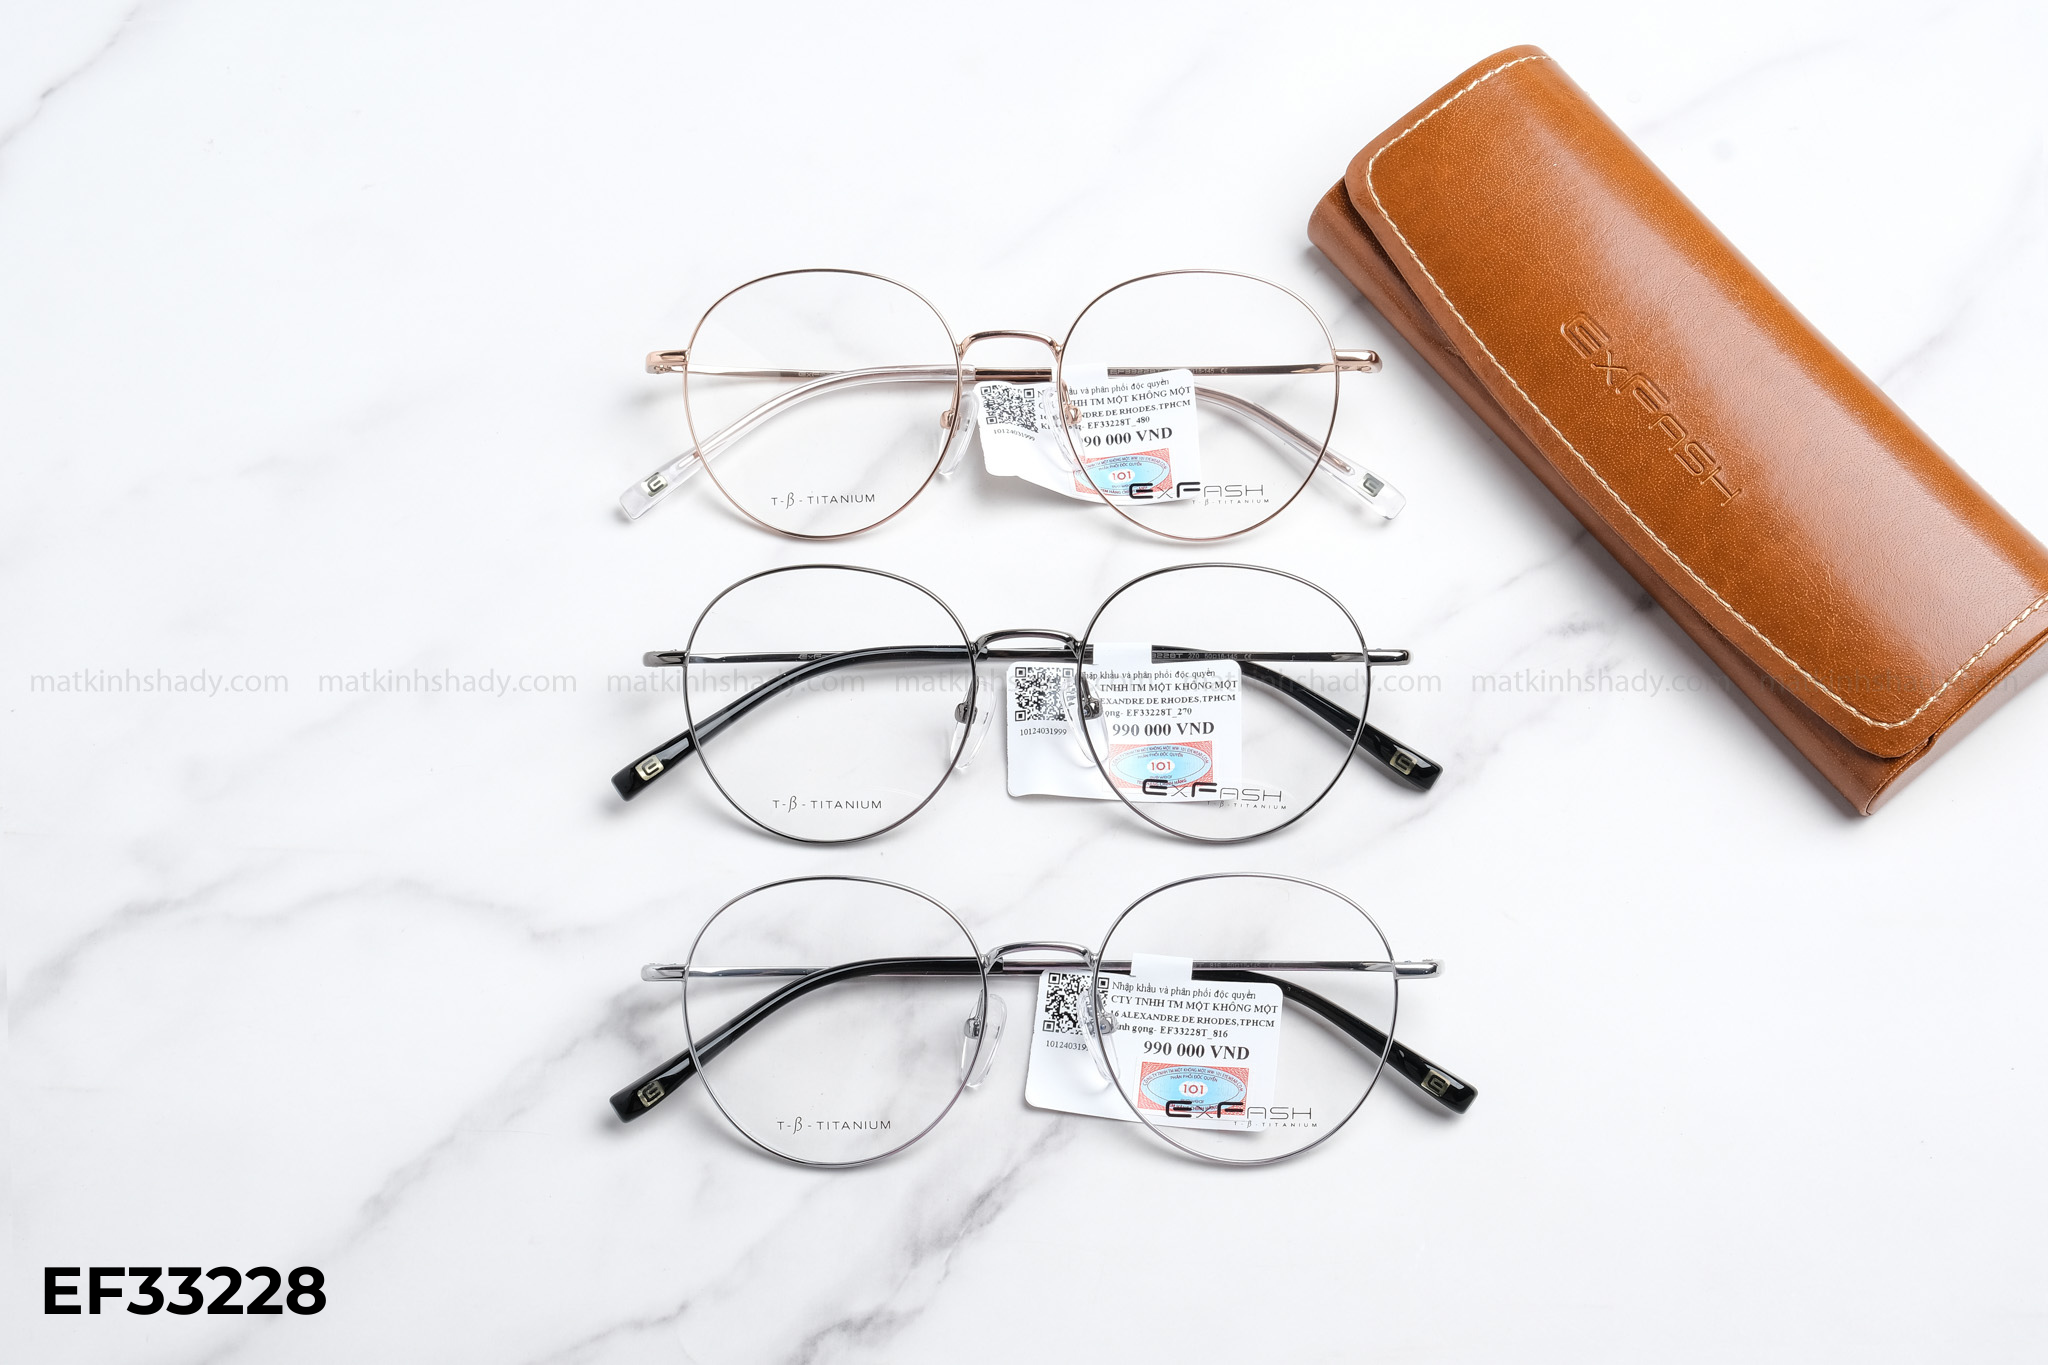  Exfash Eyewear - Glasses - EF33228 